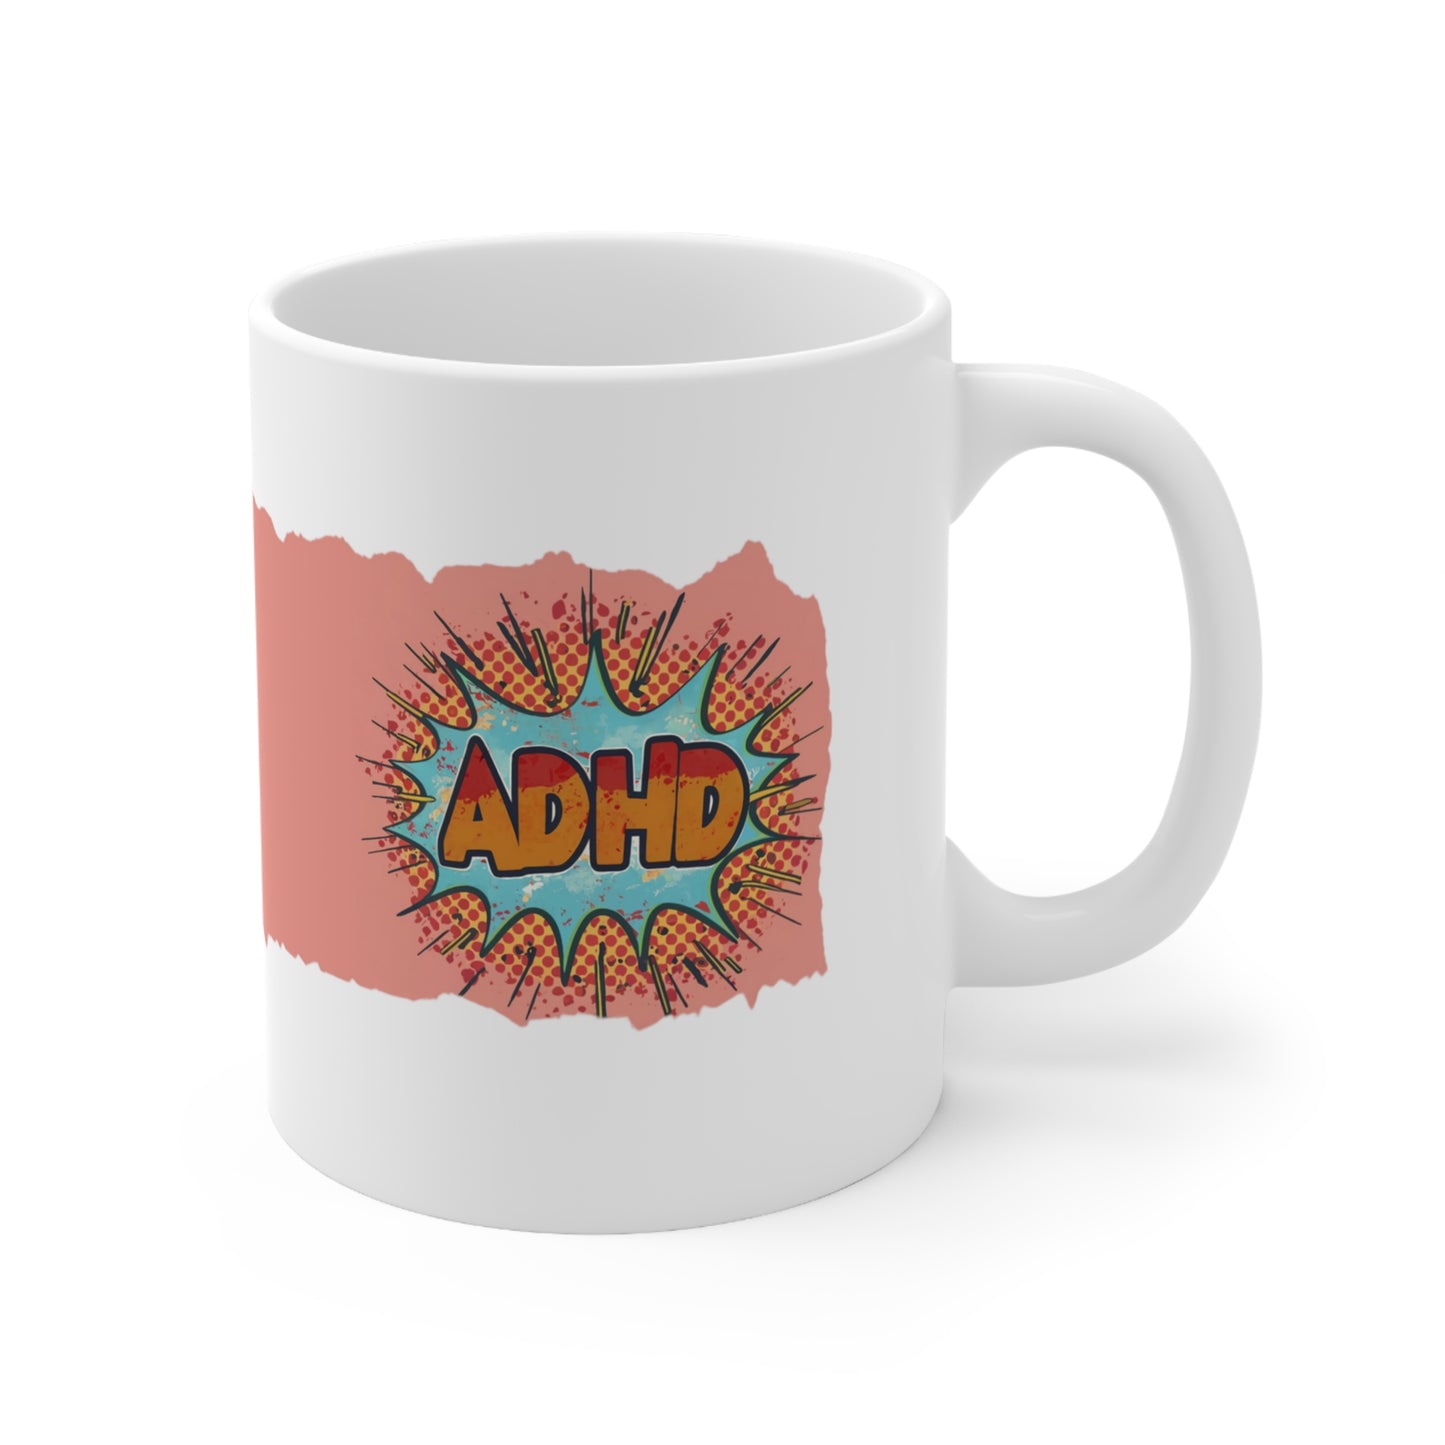 ADHD is My Superpower - Comic-Style Mug